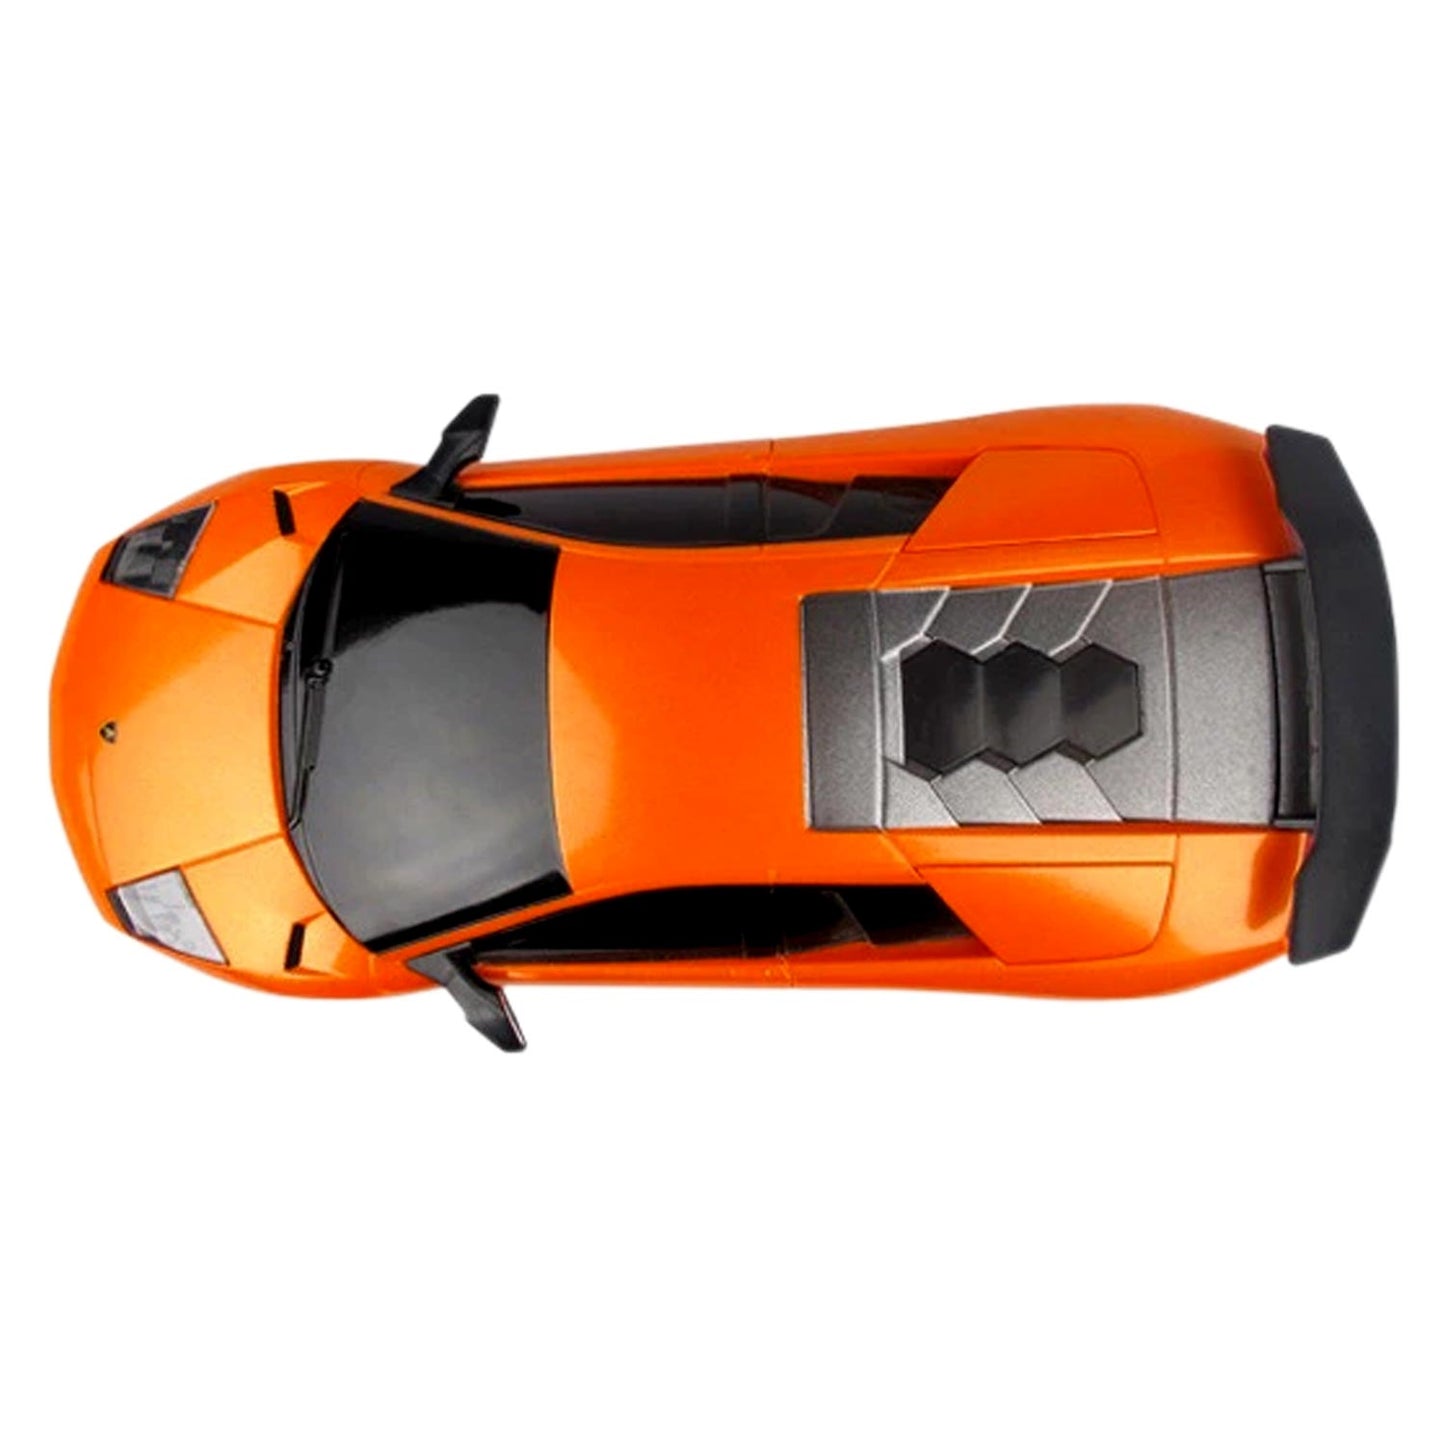 Lamborghini Murcielago LP670-4~Orange(Without Packing)